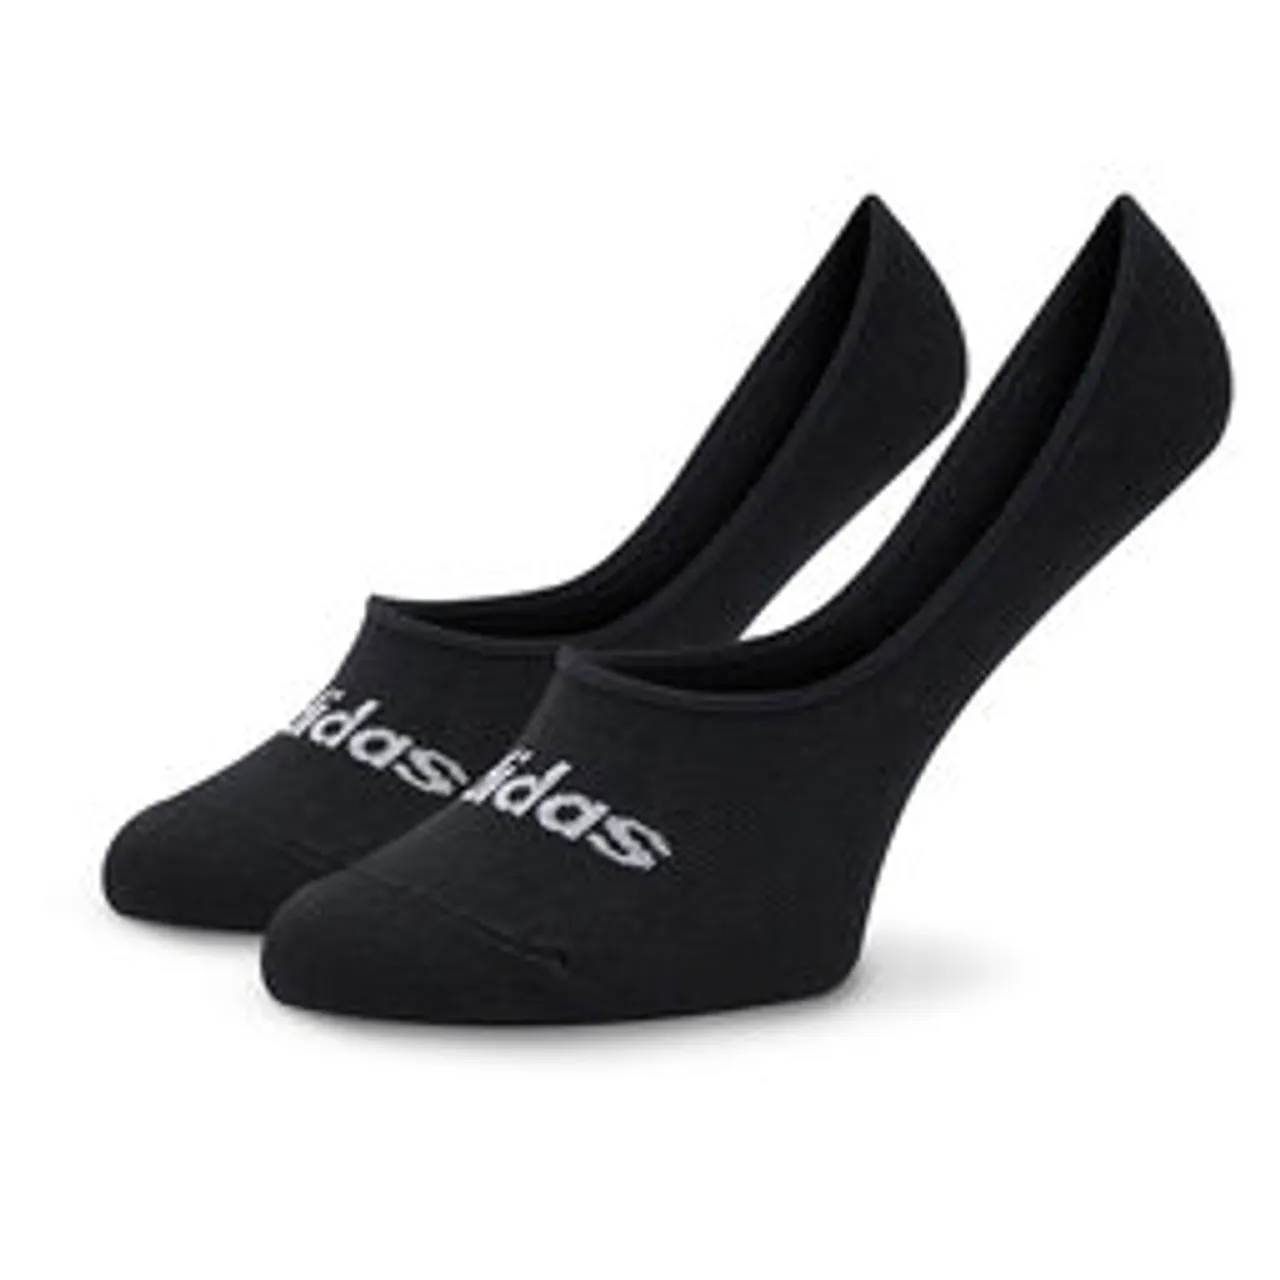 2er-Set Unisex-Sneakersocken adidas Thin Linear Ballerina IC1295 White/Black